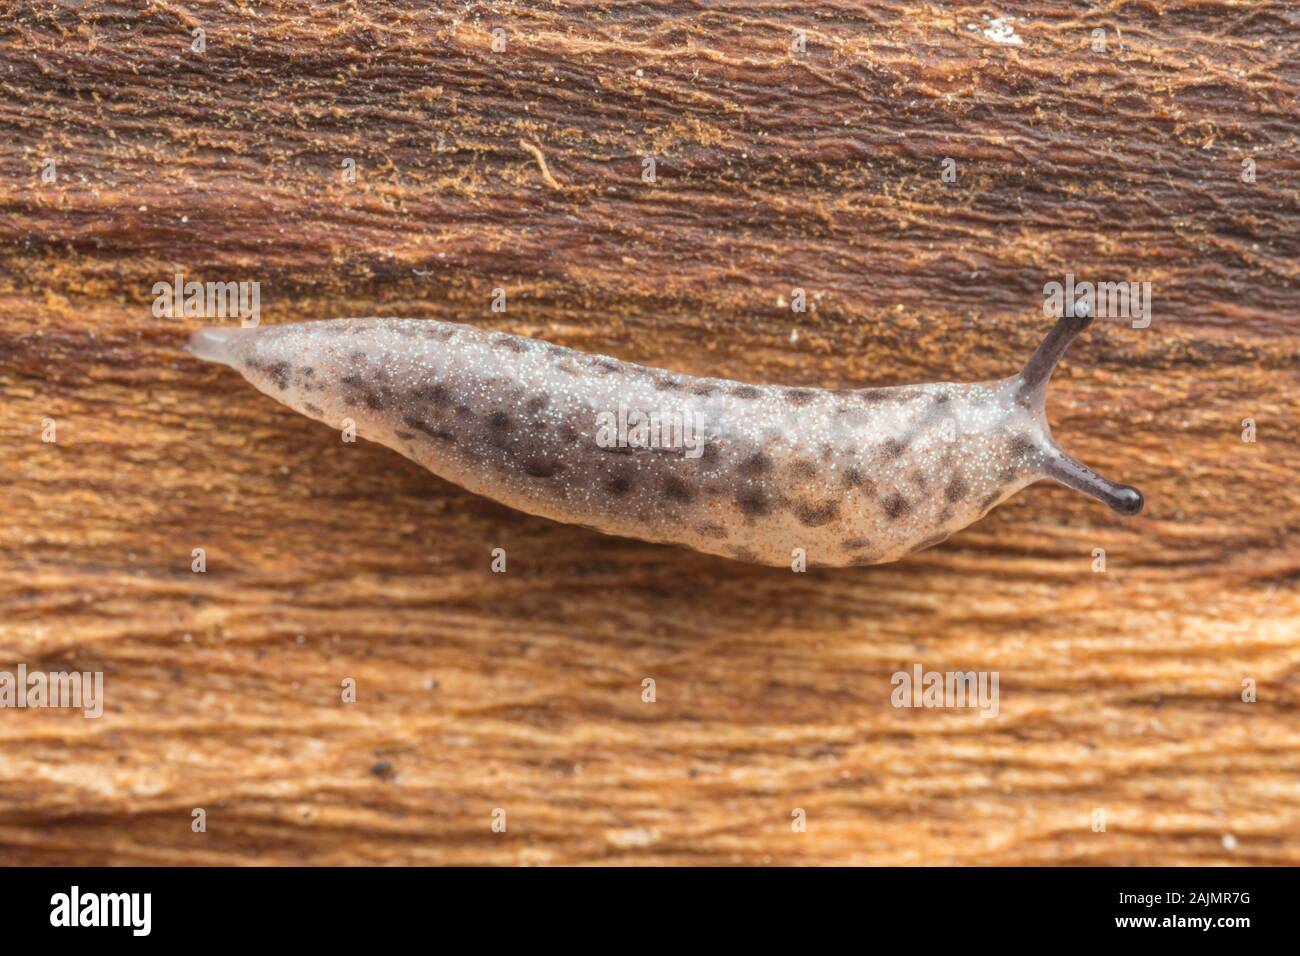 A juvenile Changeable Mantleslug (Megapallifera mutabilis) Stock Photo